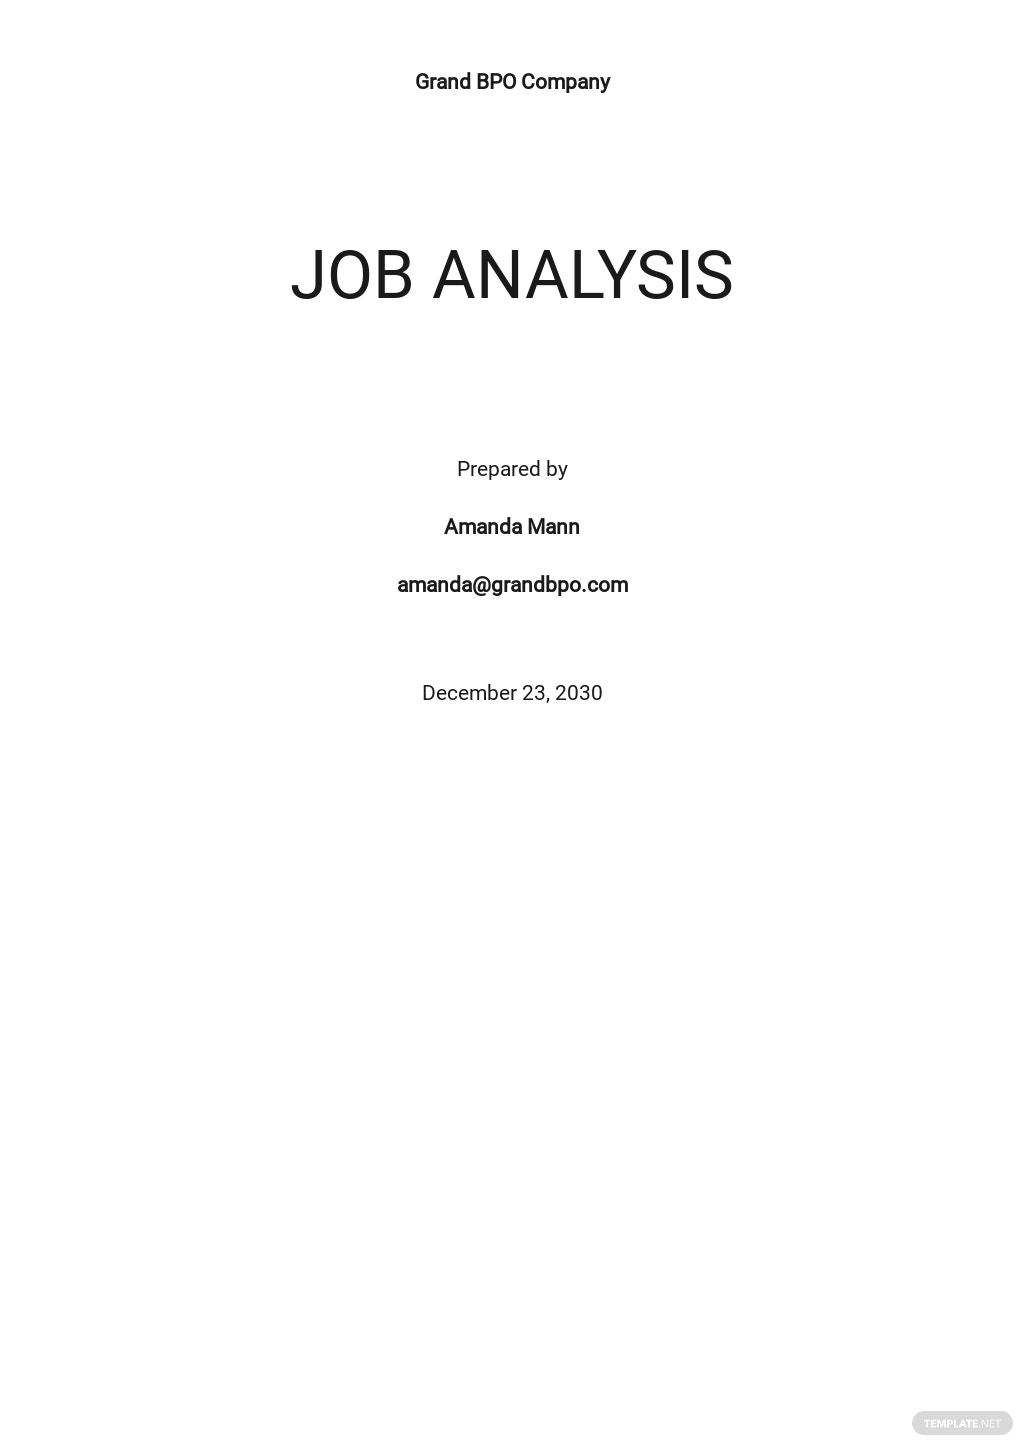 job analysis research paper